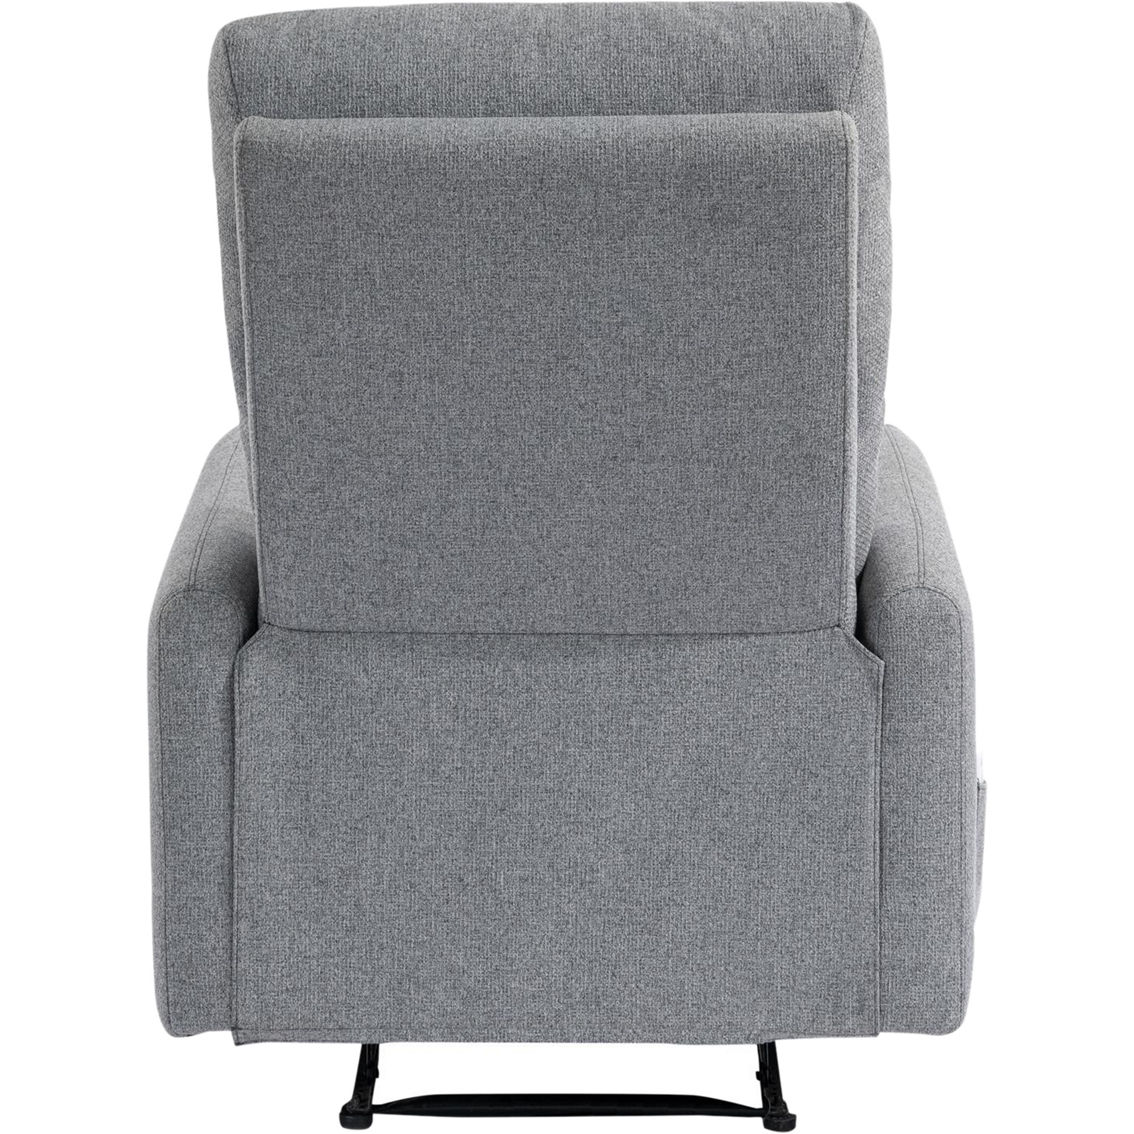 DHP Kai Power Recliner Chair with 8 Zone Massage and Lumbar Heat, Dark Gray Linen - Image 3 of 8